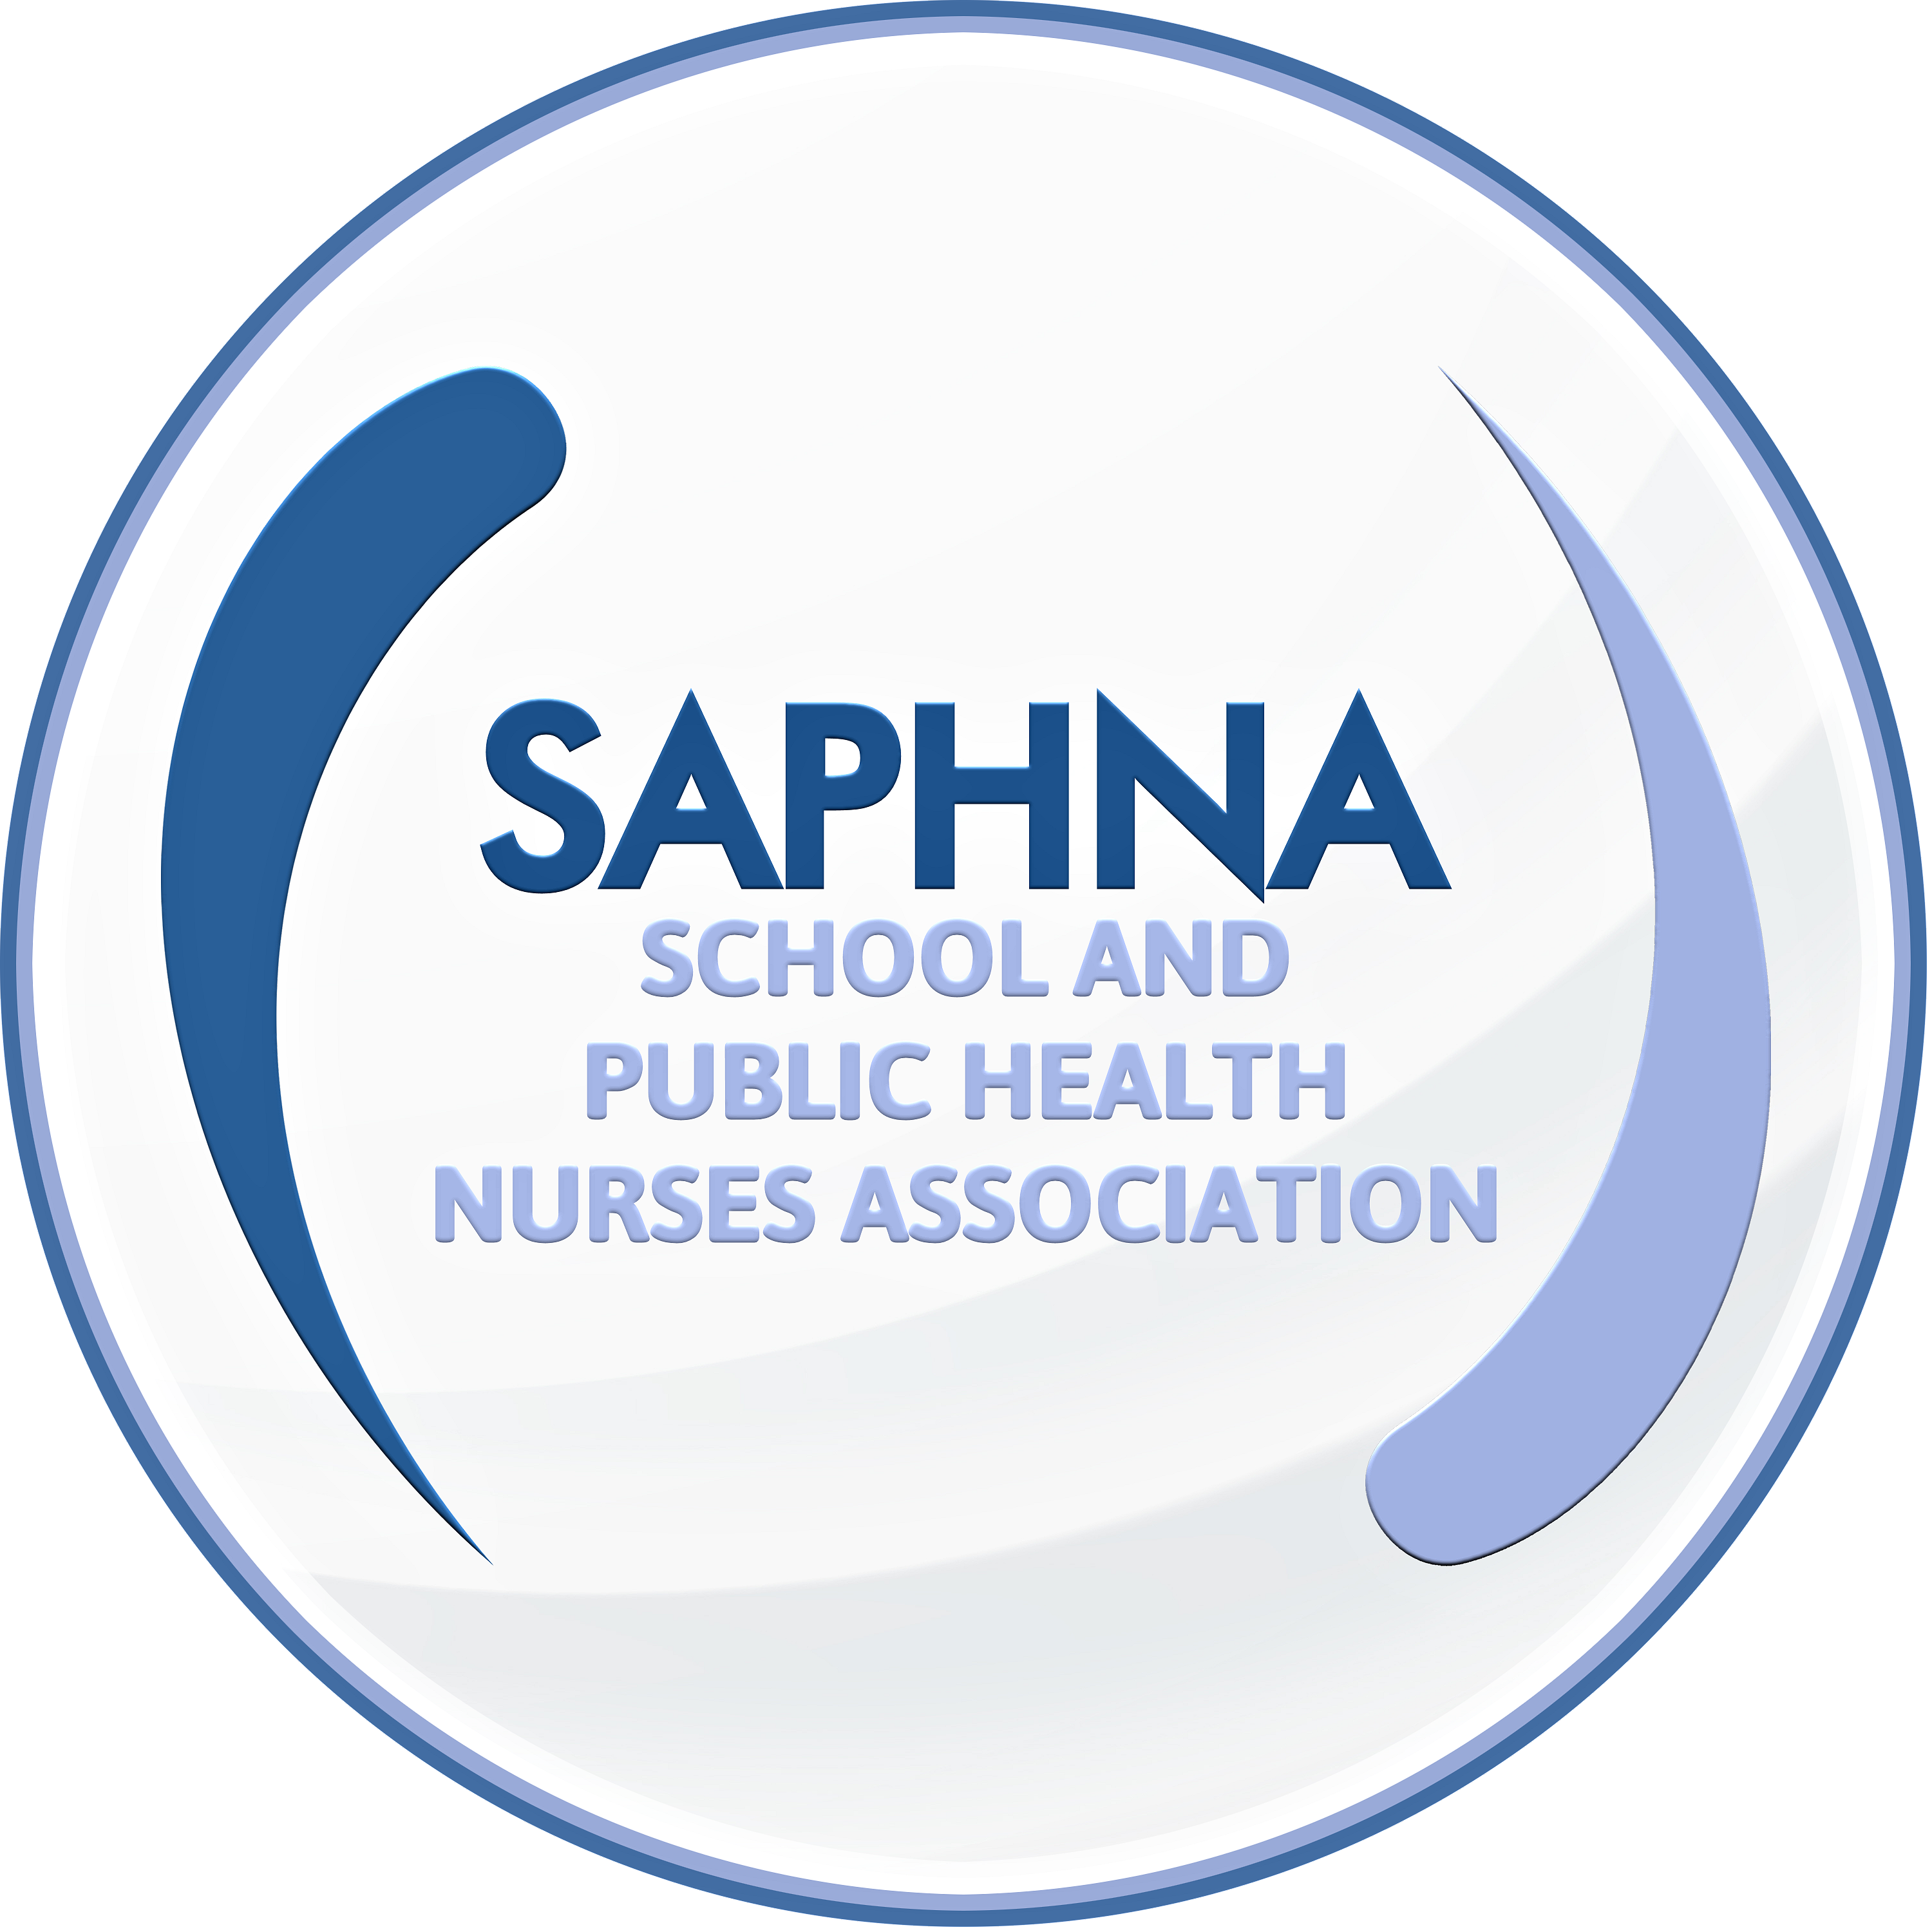 SAPHNA – School And Public Health Nurses Association